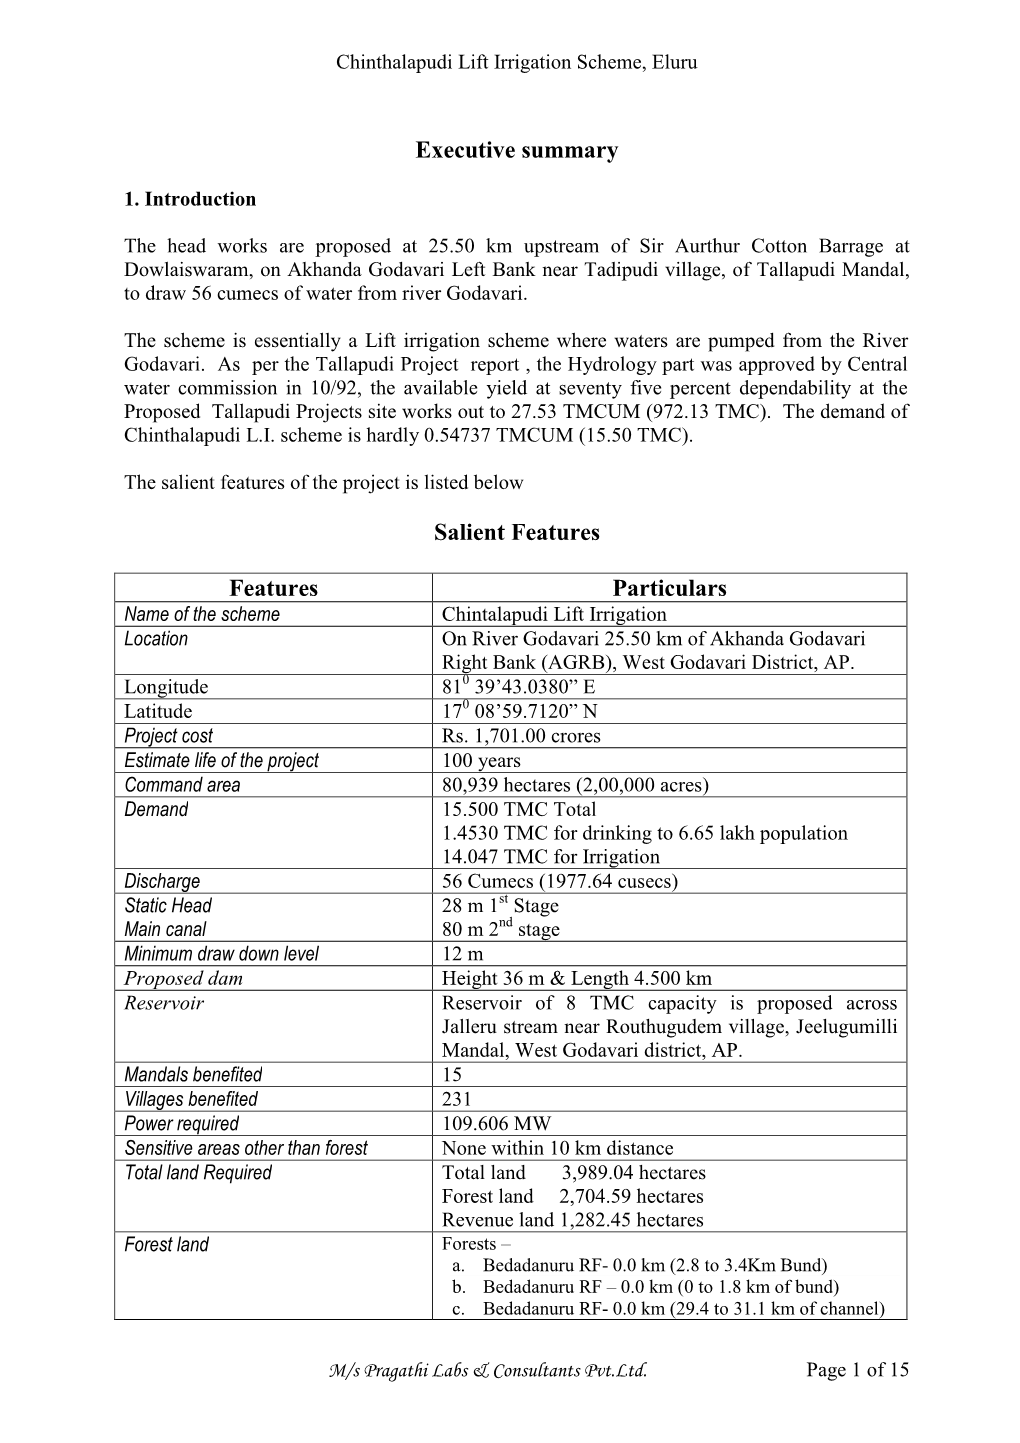 Chinthalapudi Lift Irrigation Scheme, Eluru M/S Pragathi Labs & Consultants Pvt.Ltd. Page 1 of 15